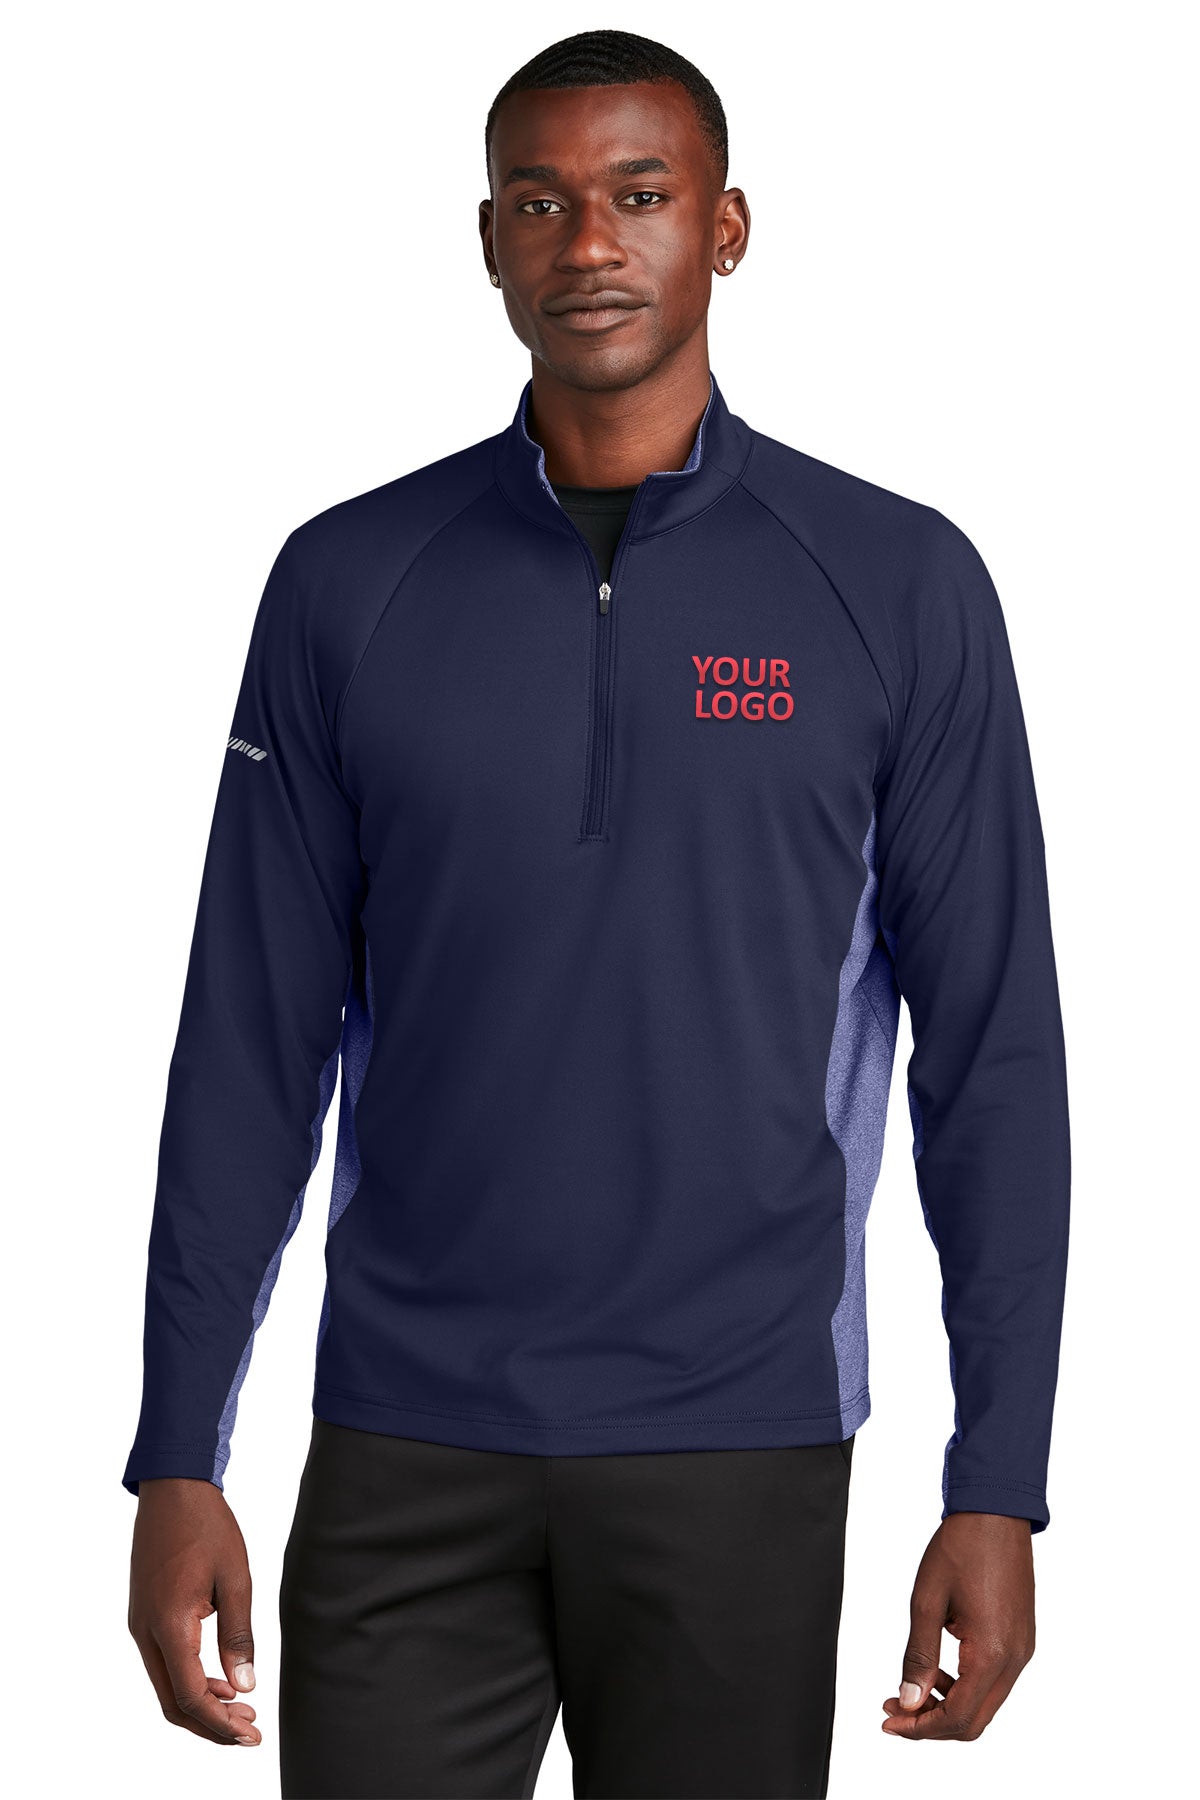 Sport-Tek True Navy/ True Navy Heather ST854 sweatshirts with company logo